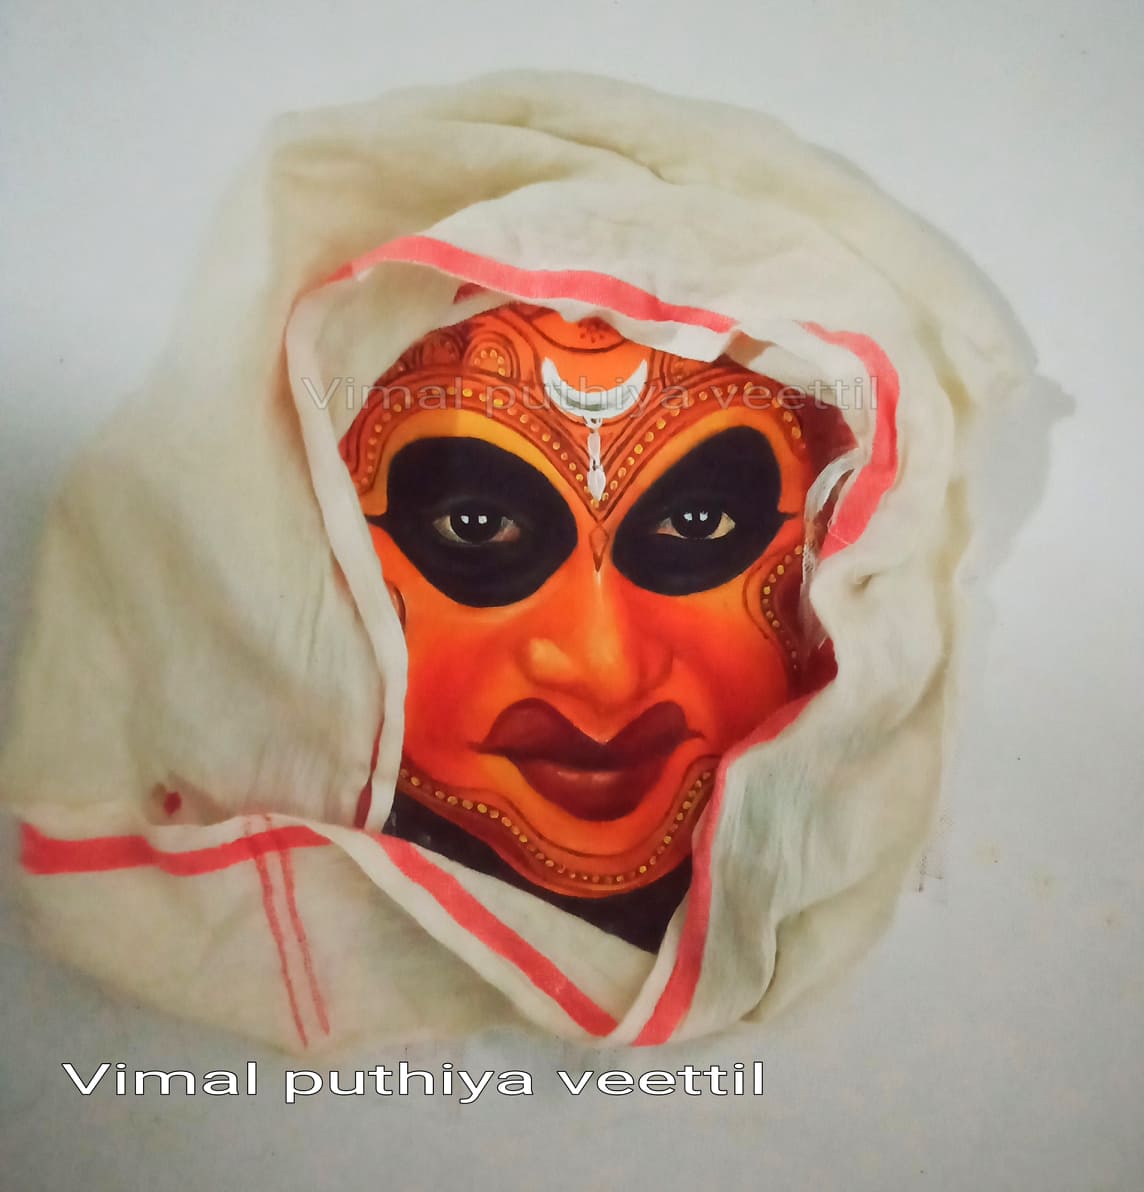 athmaonline-vimal-puthiya-veettil-002